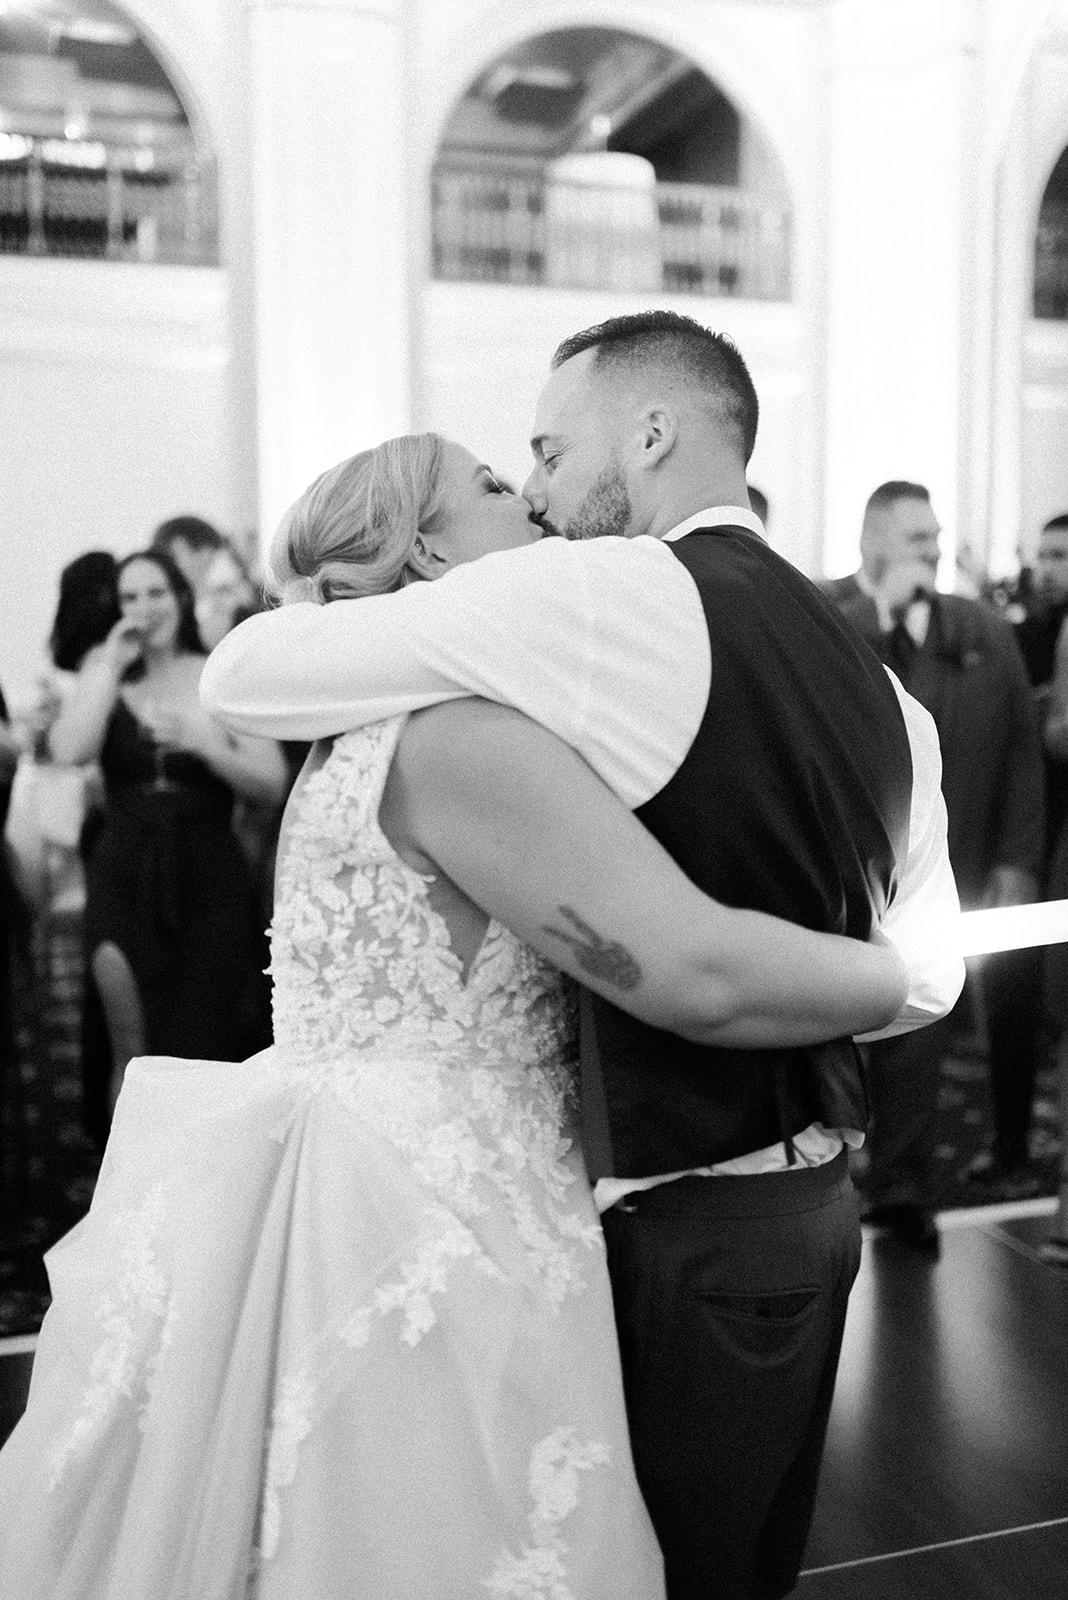 Pennsylvania wedding photographer captures couple kissing at reception